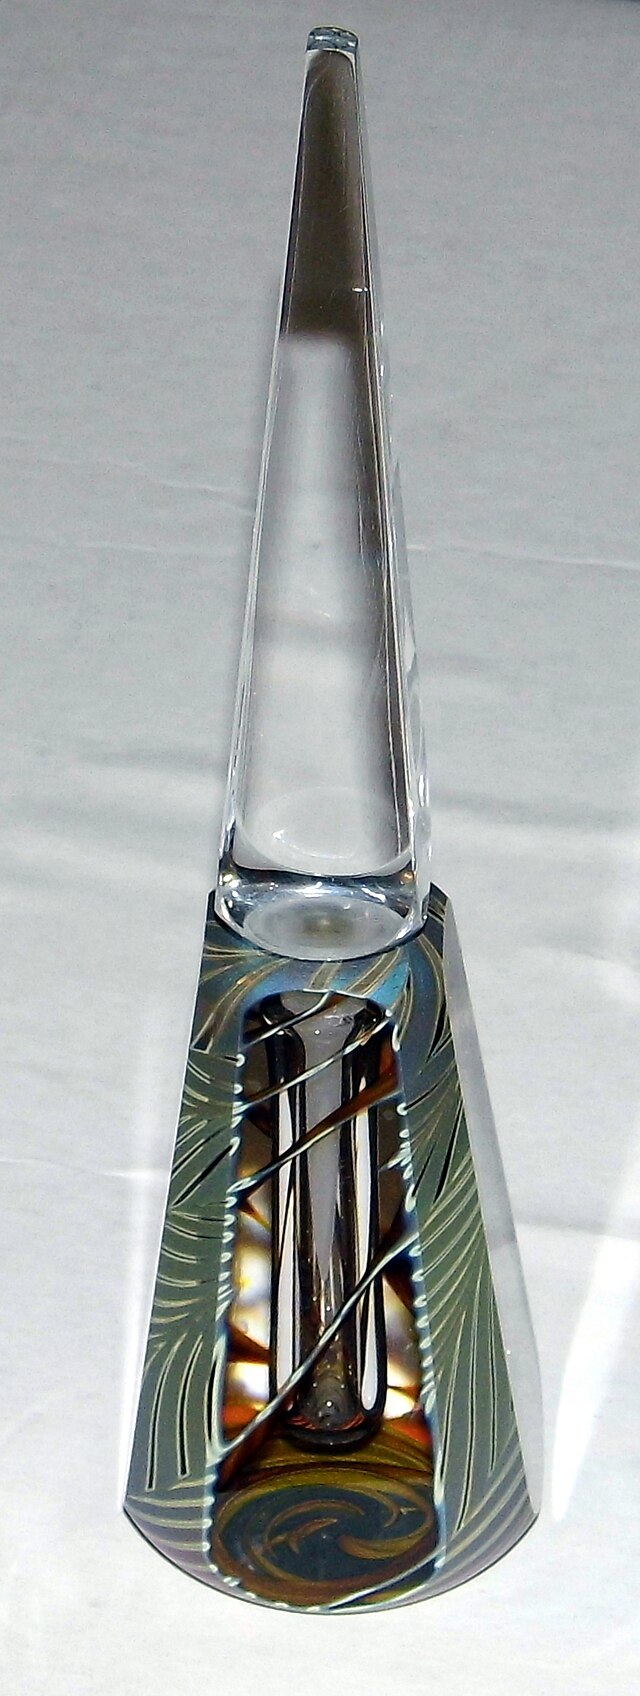 Lead glass - Wikipedia